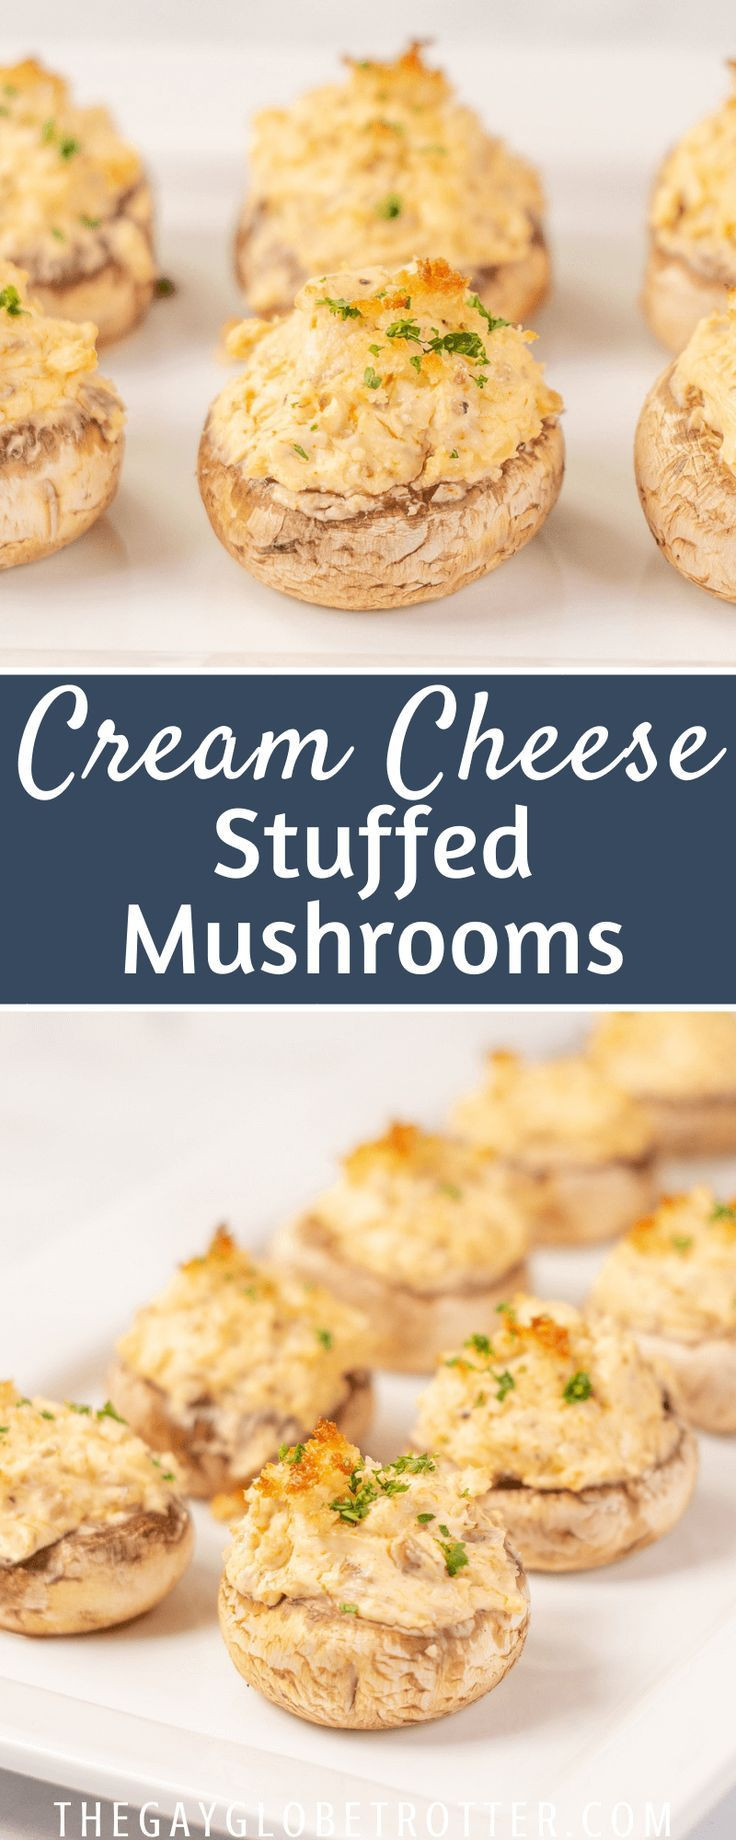 Easy Stuffed Mushrooms Cream Cheese
 These easy cream cheese stuffed mushrooms with bread